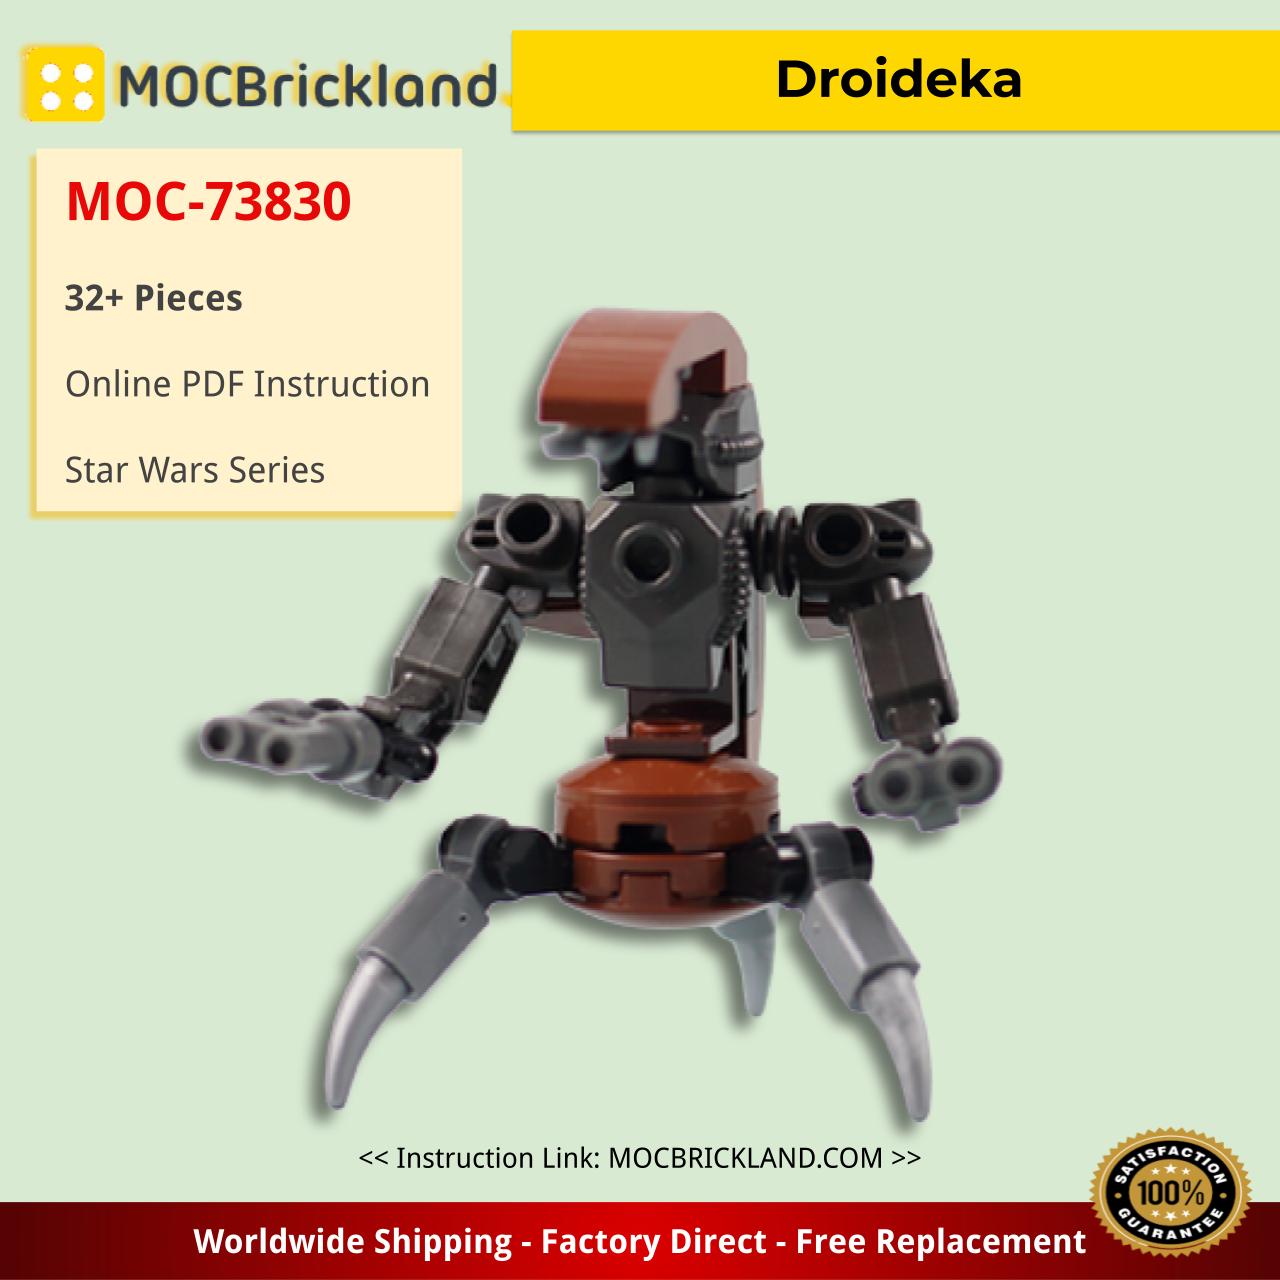 MOCBRICKLAND MOC-73830 Droideka